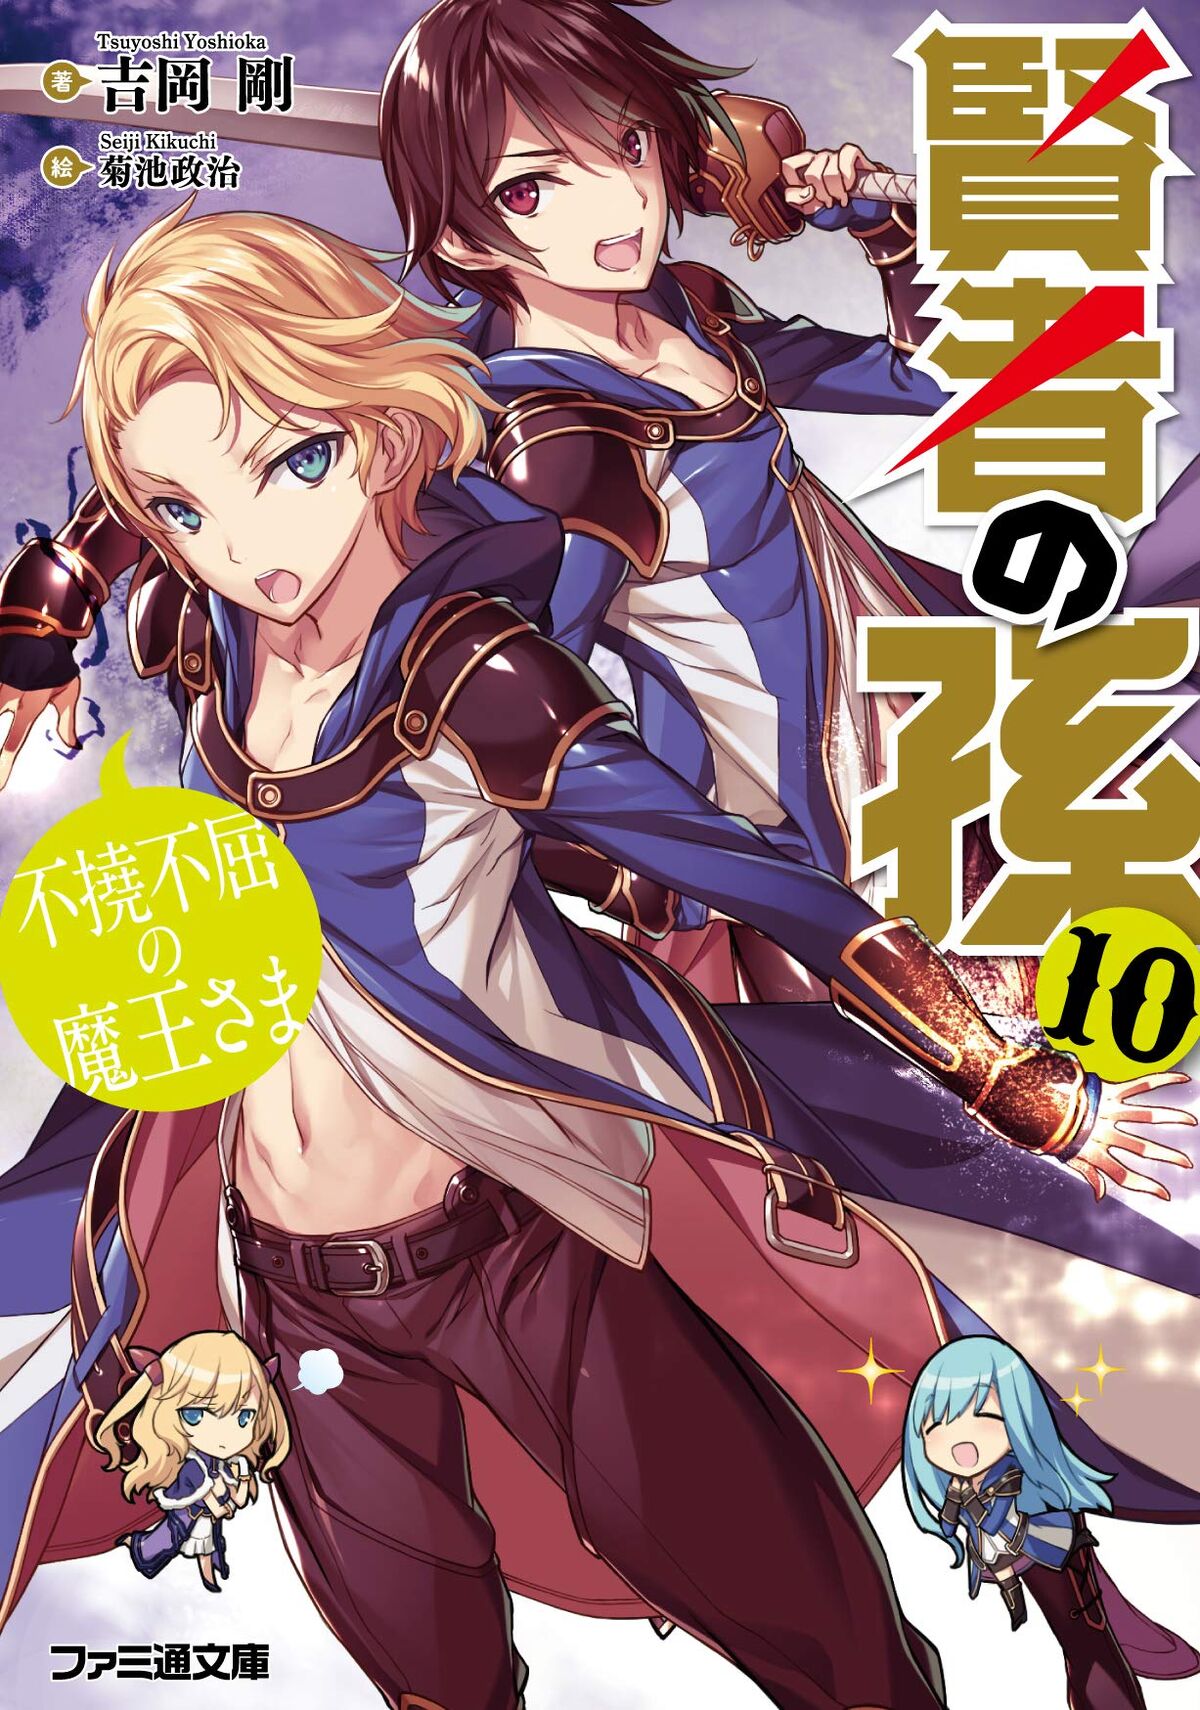 Light Novel Volume 10 | Kenja no Mago Wiki | Fandom